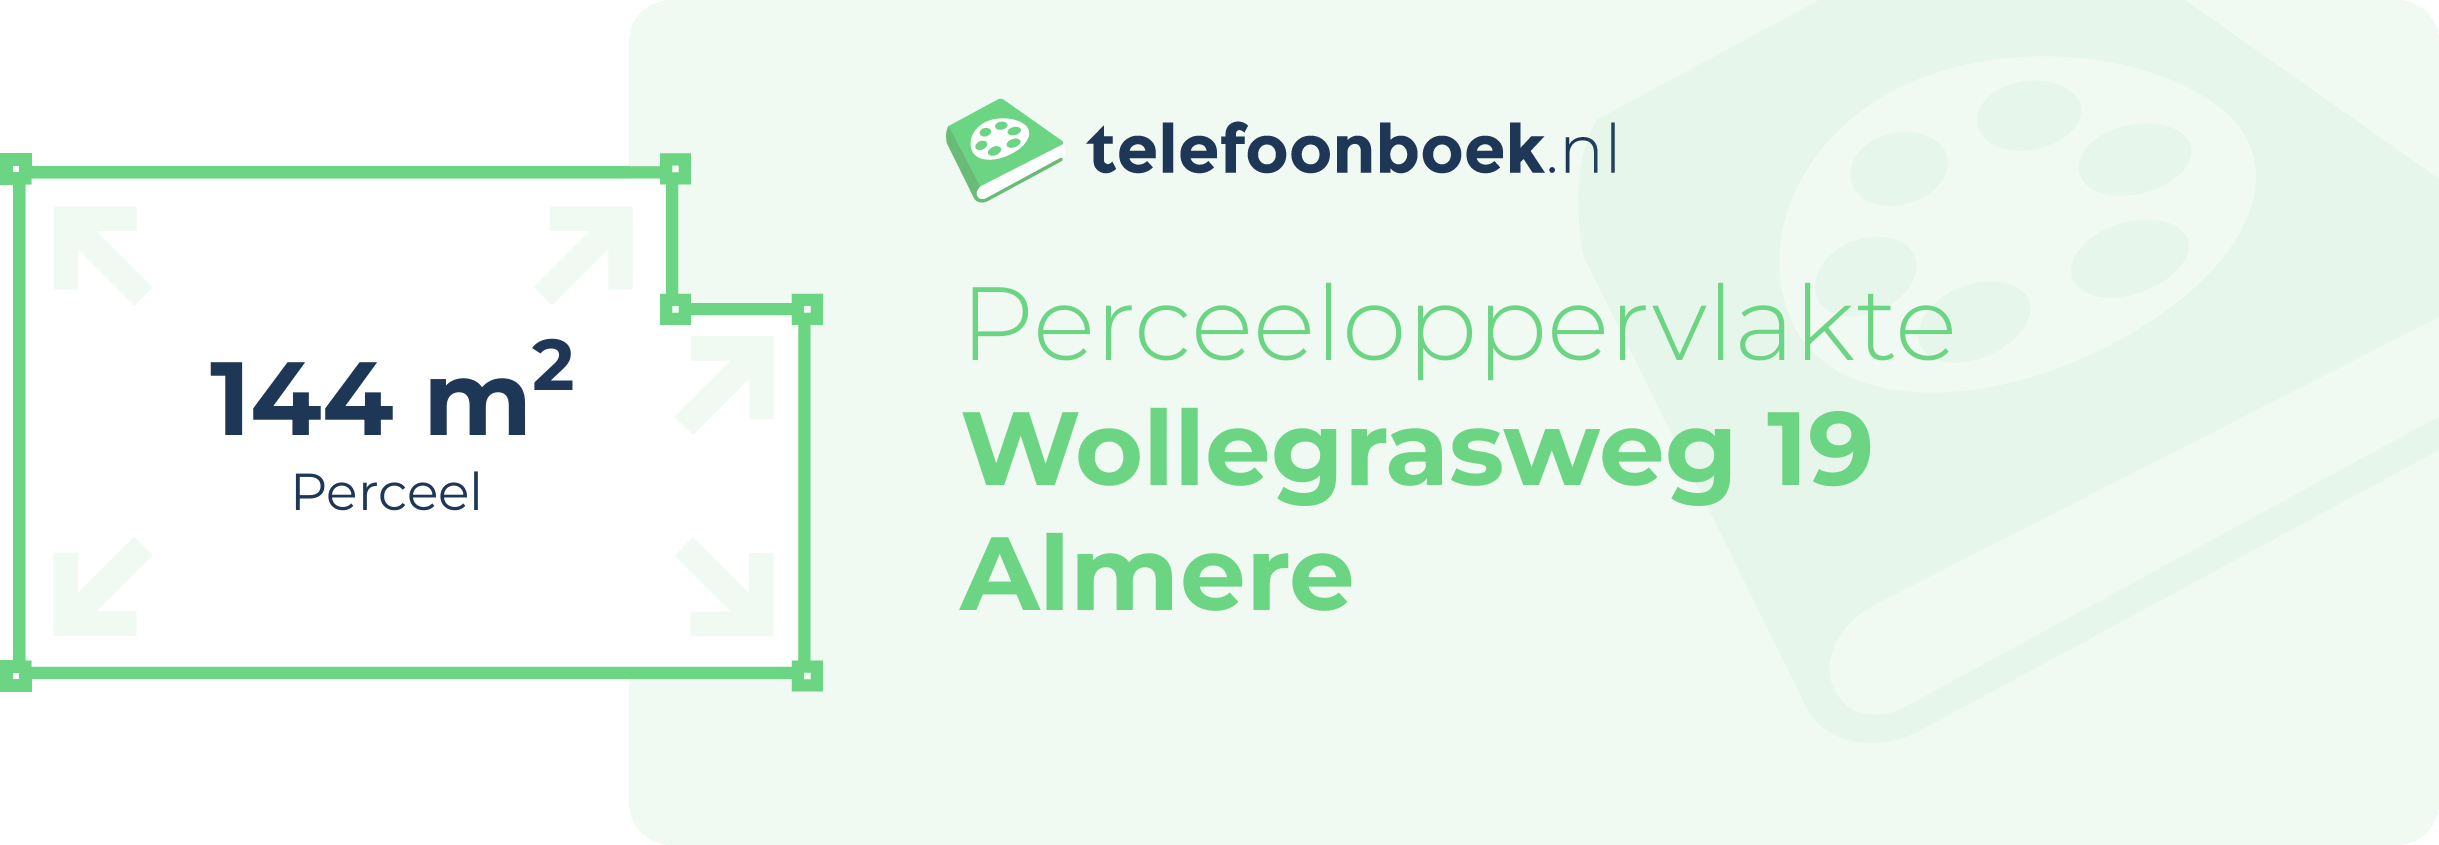 Perceeloppervlakte Wollegrasweg 19 Almere